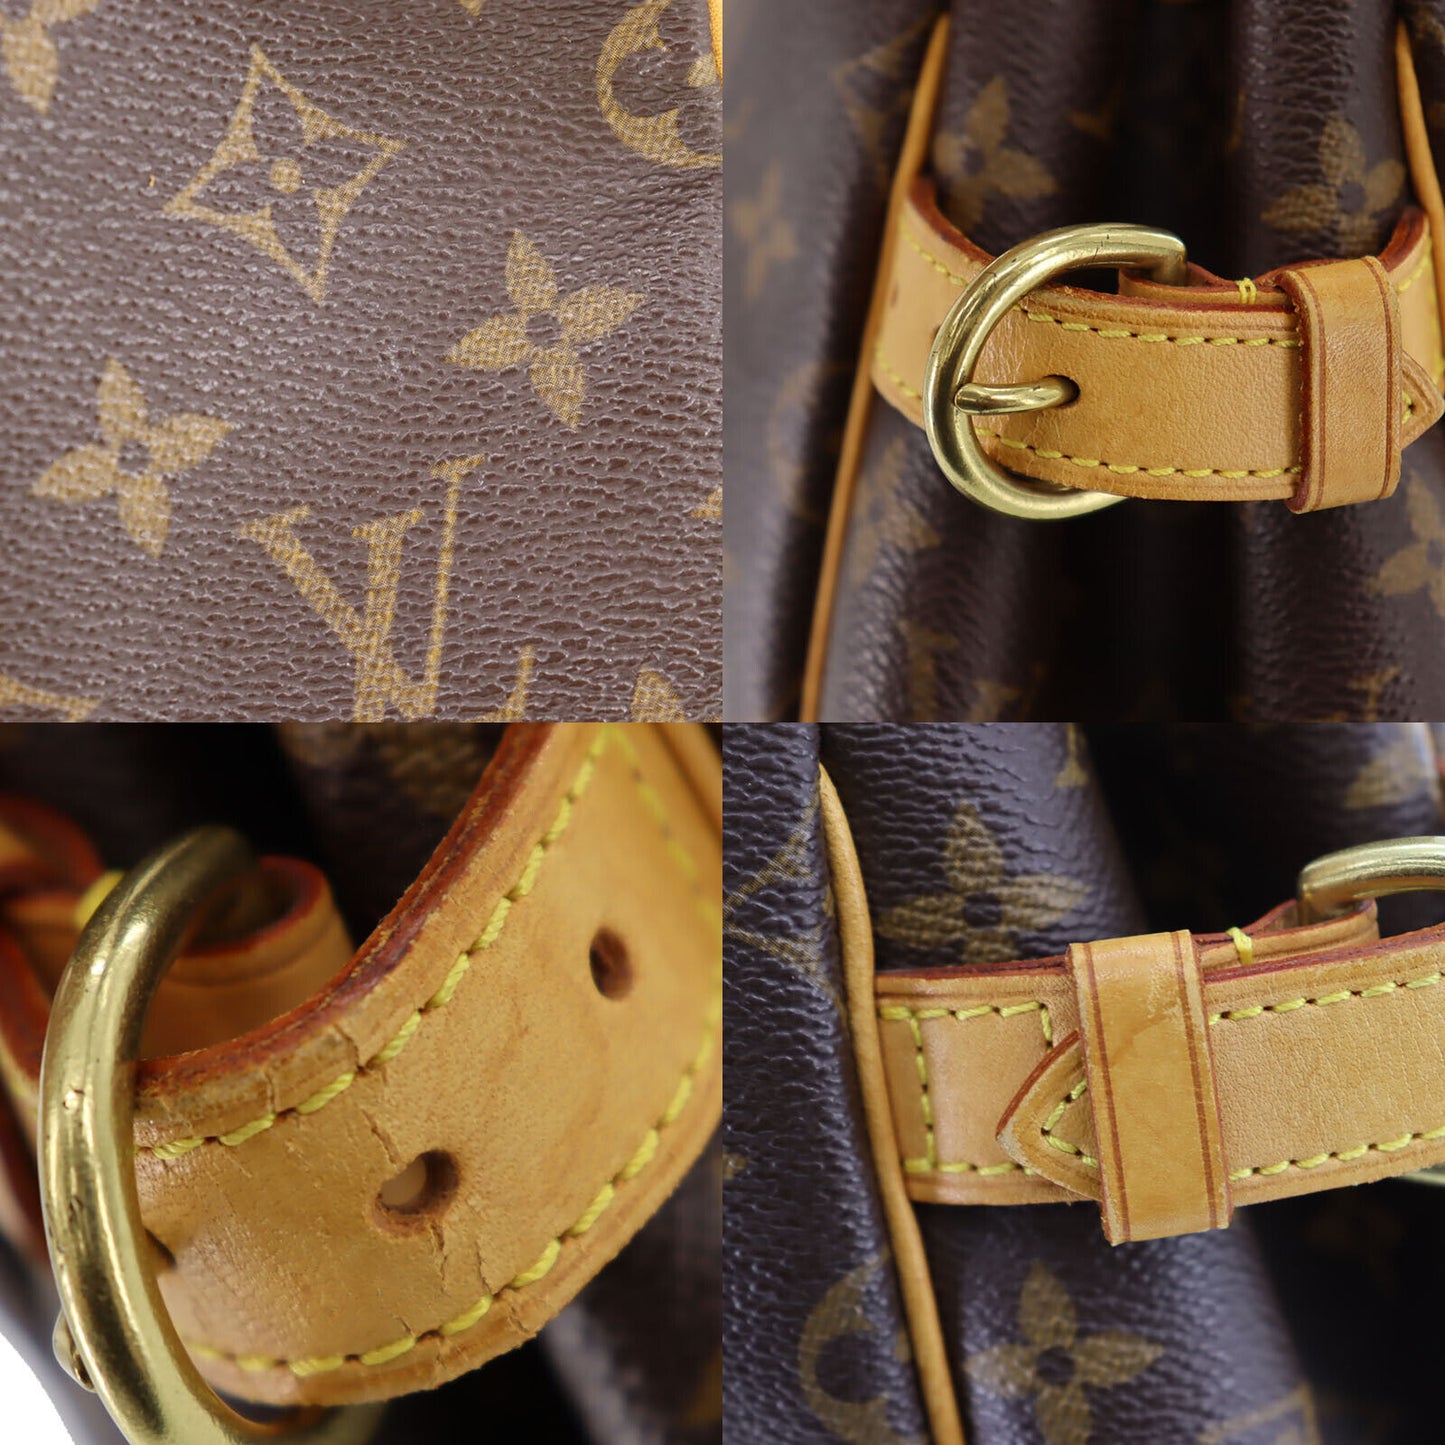 LOUIS VUITTON Batignolles Tote Handbag Monogram Leather M51156 #BO6